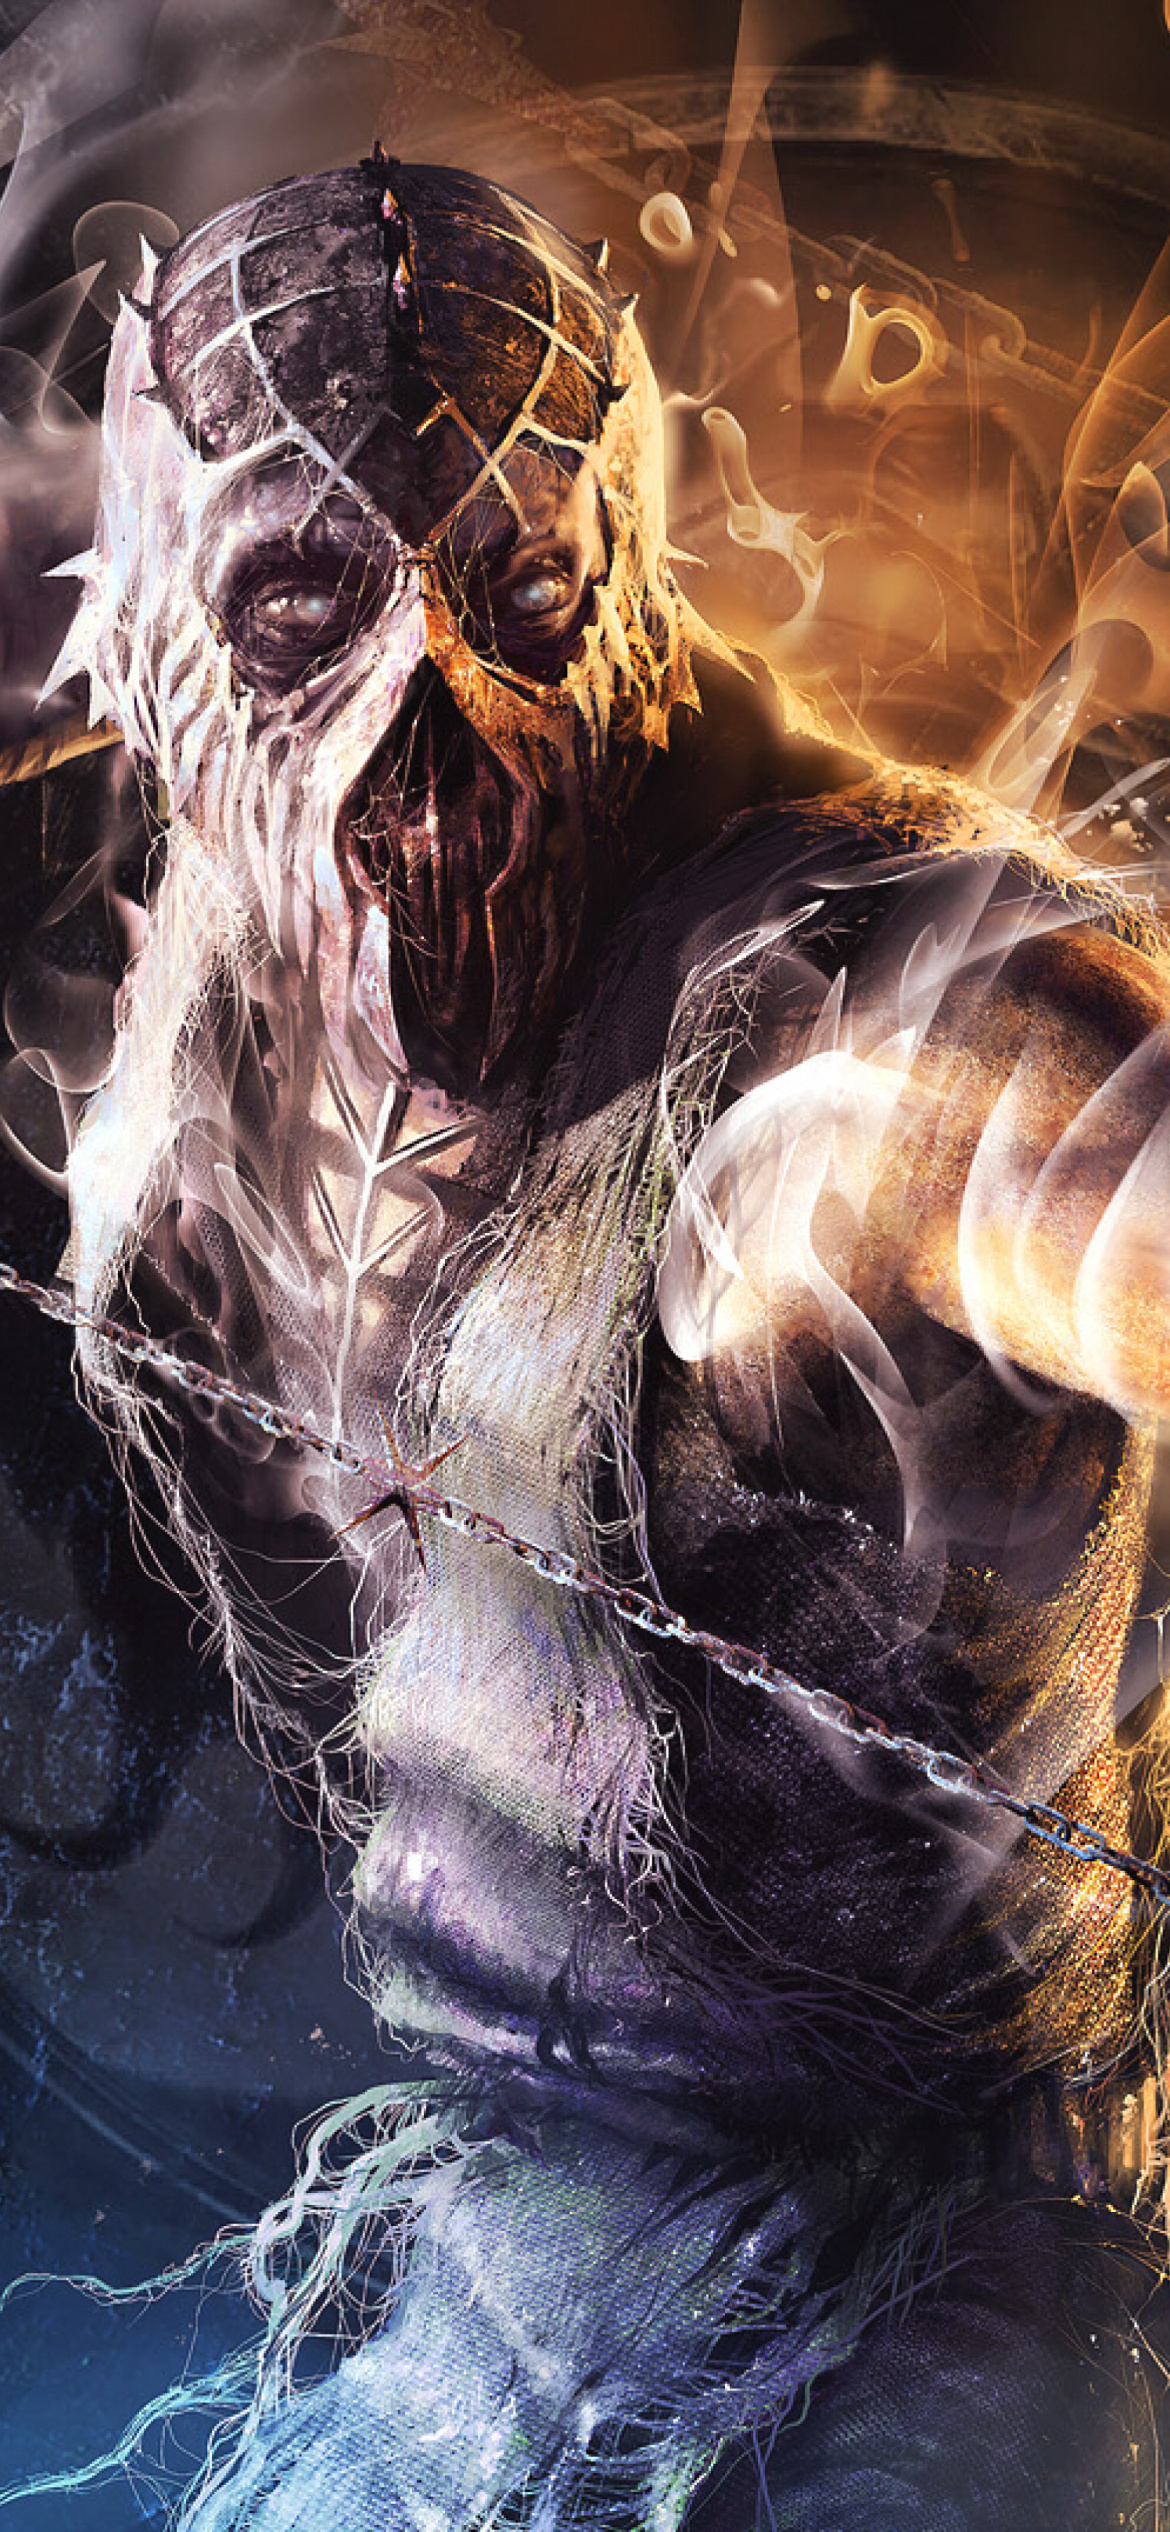 Krypt Demon in Mortal Kombat Wallpaper for iPhone 12 Pro